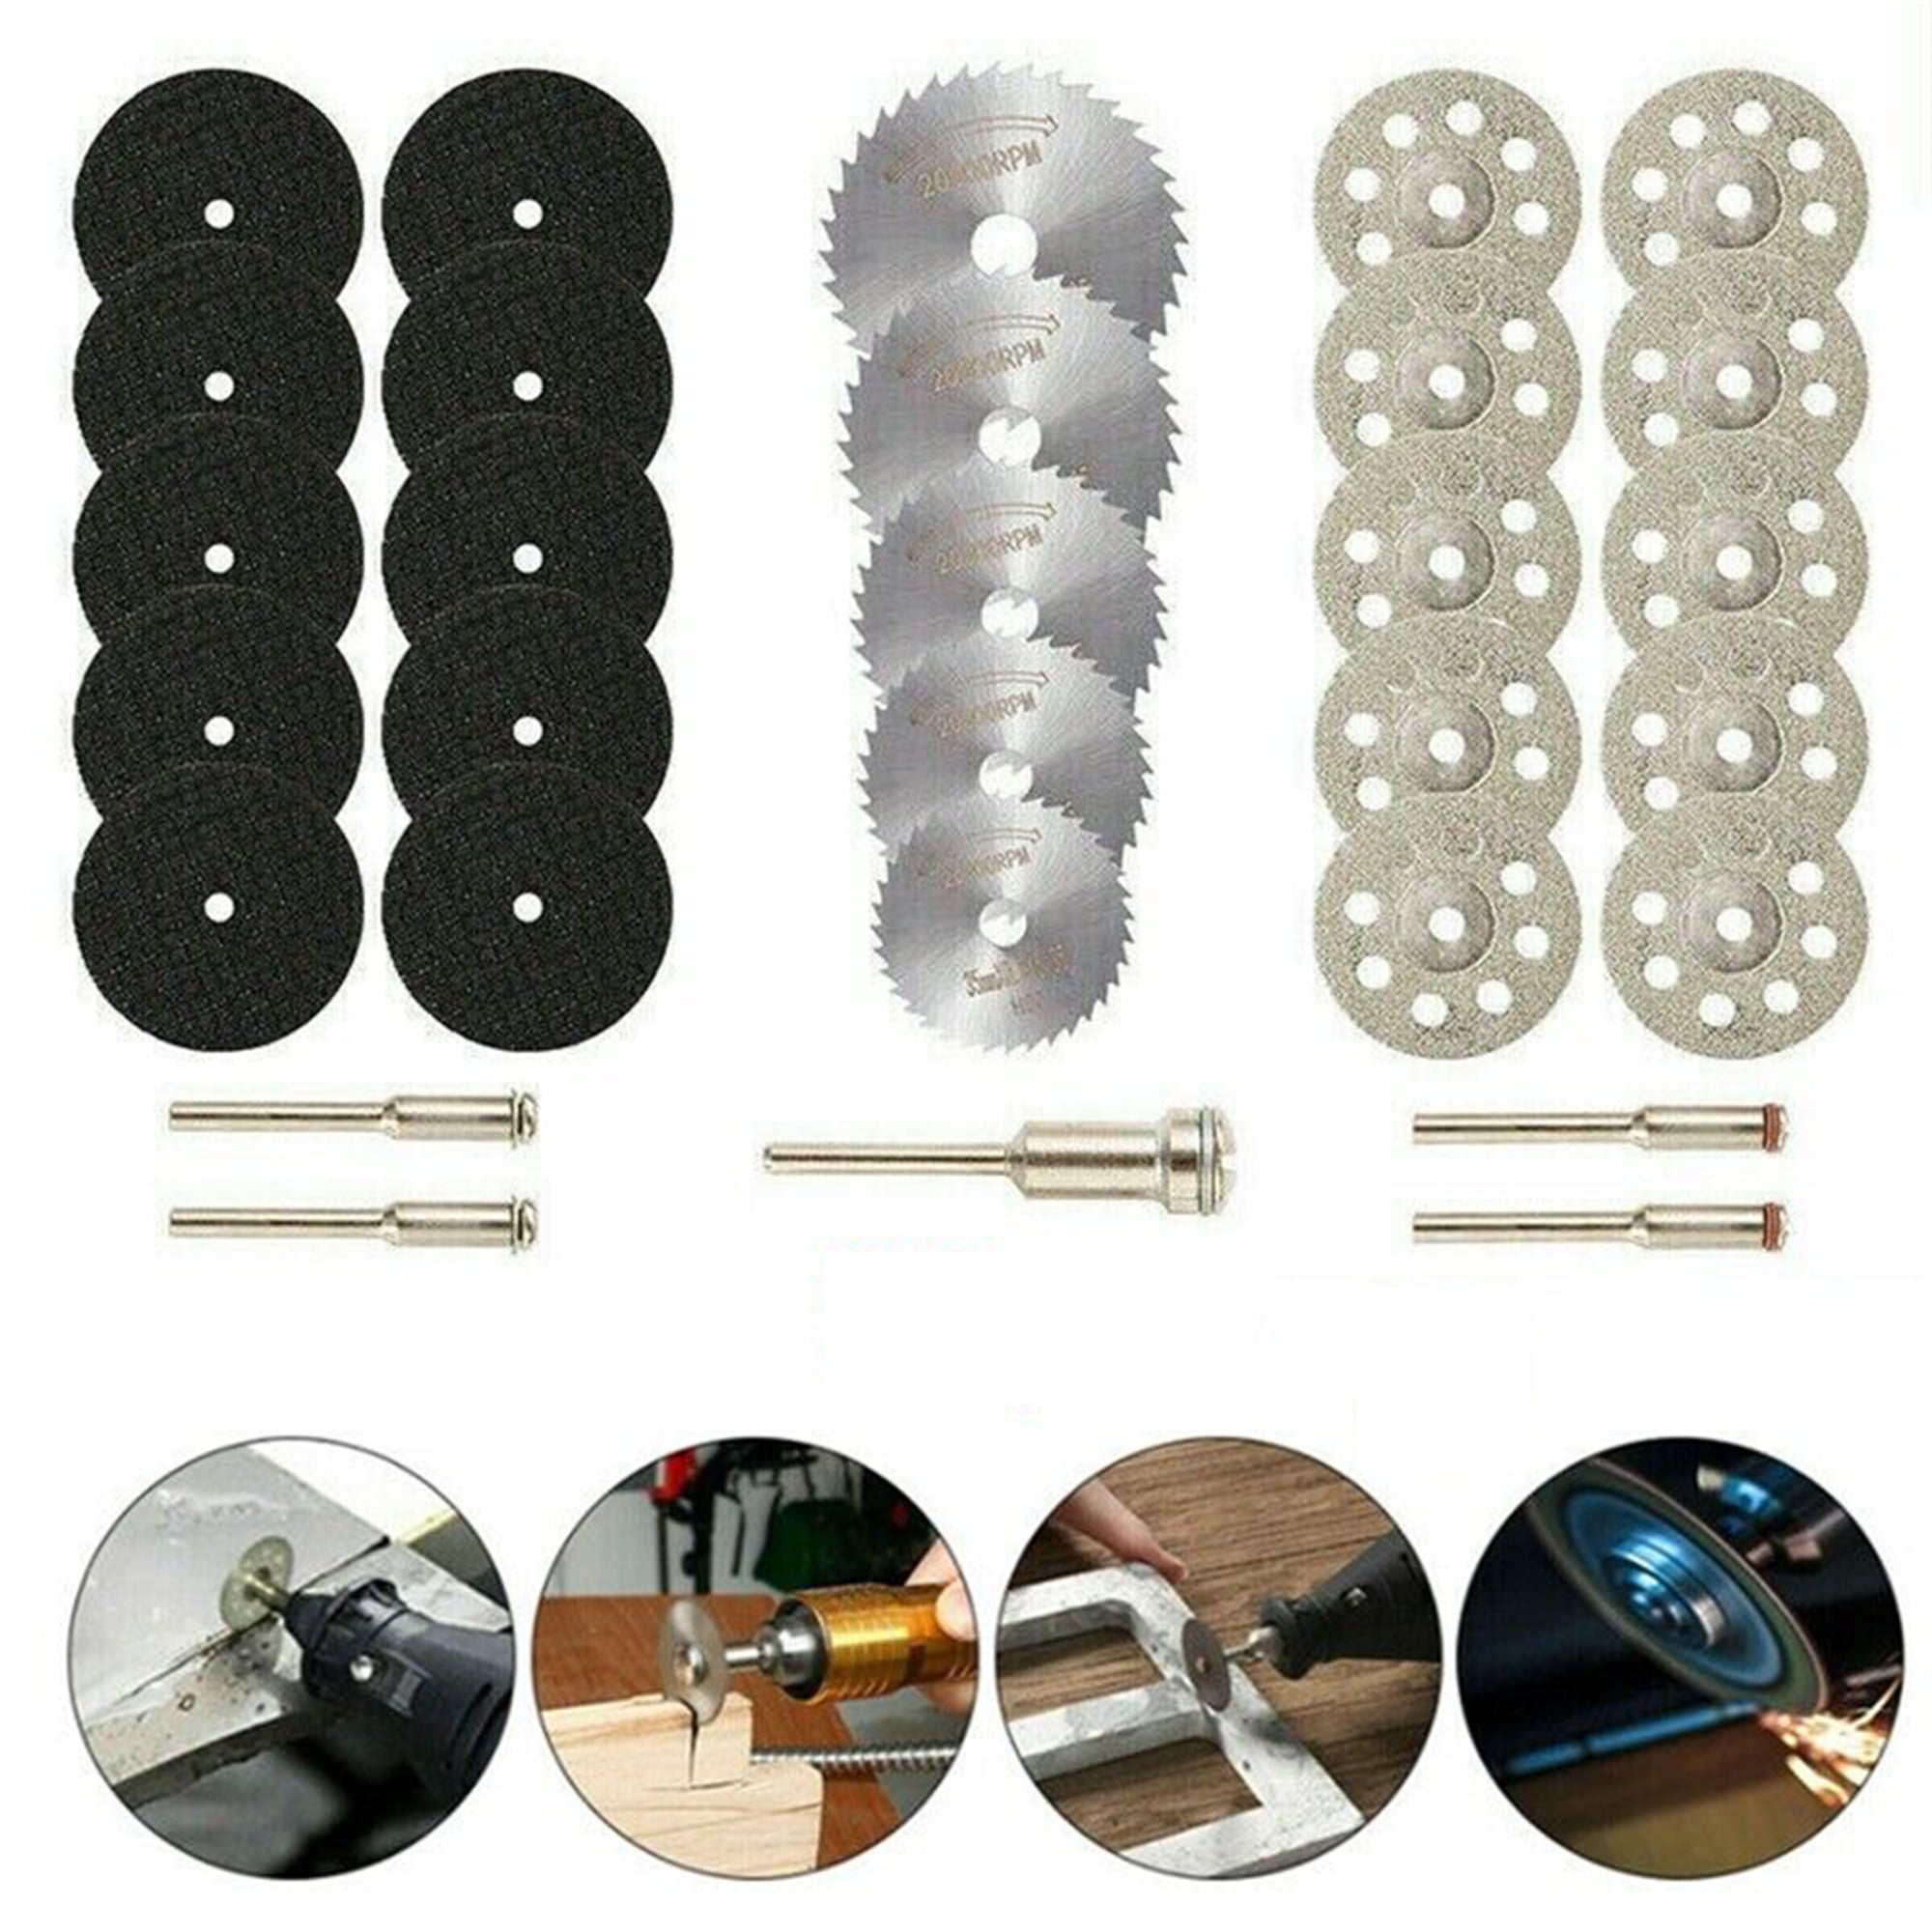 30x Diamond Cutting Discs Wheel Saw Blades Set+Drill Bit For Dremel Rotary Tool